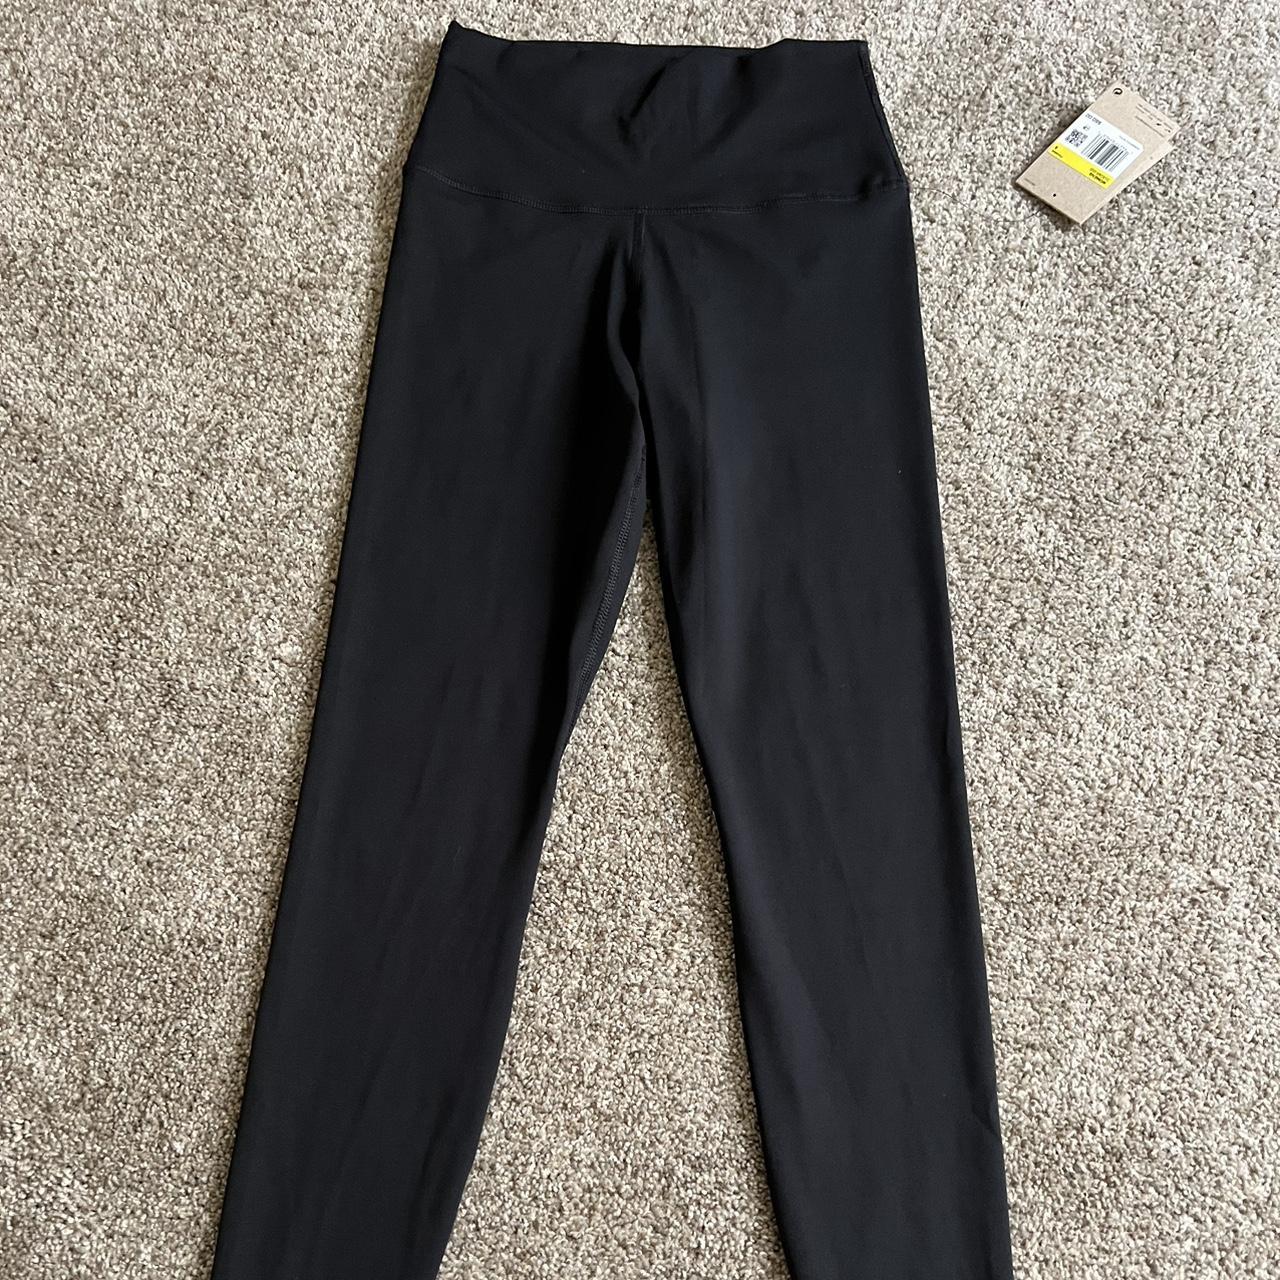 black capri leggings ⟡ worn a few times, no flaws - Depop